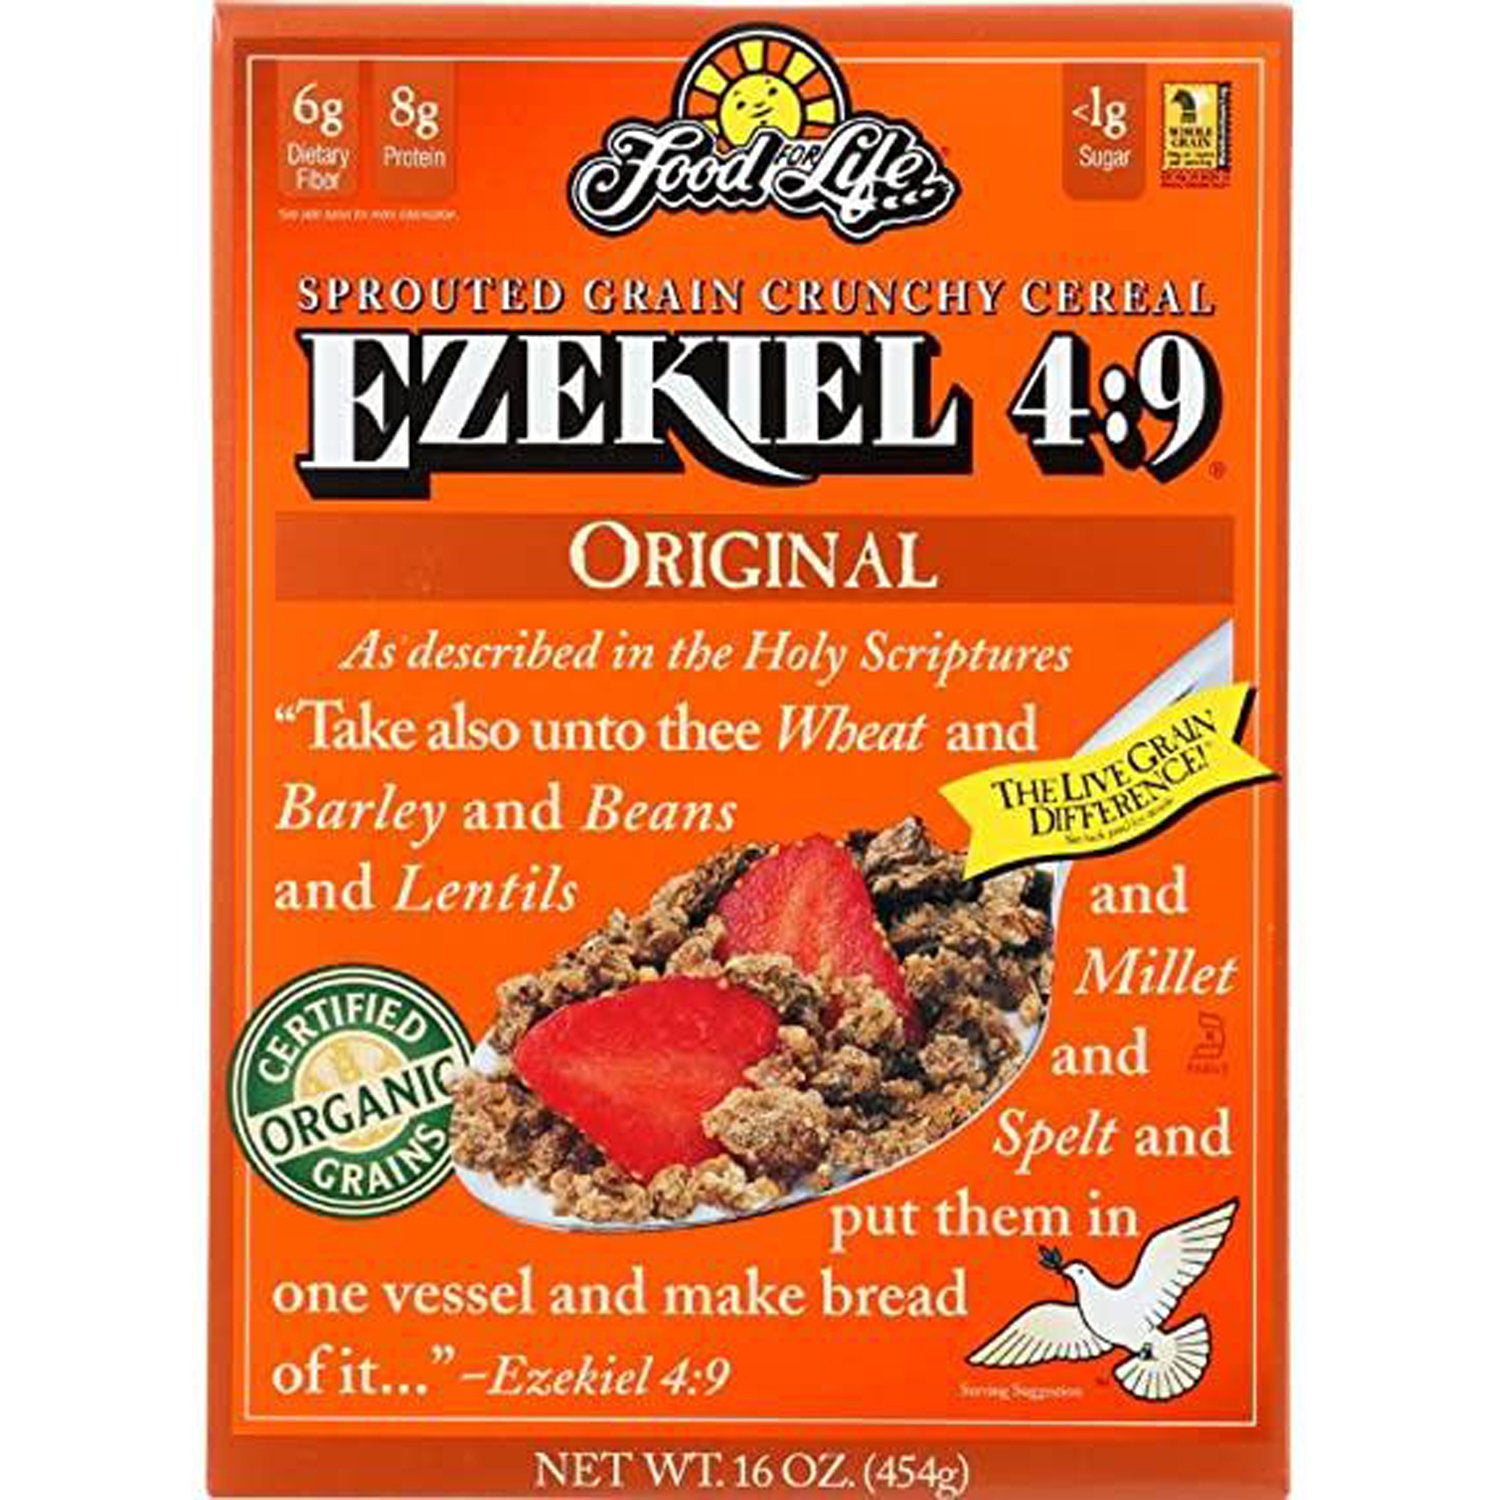 EZEKIEL 4:9® Original Sprouted Grain Crunchy Cereal, 454g